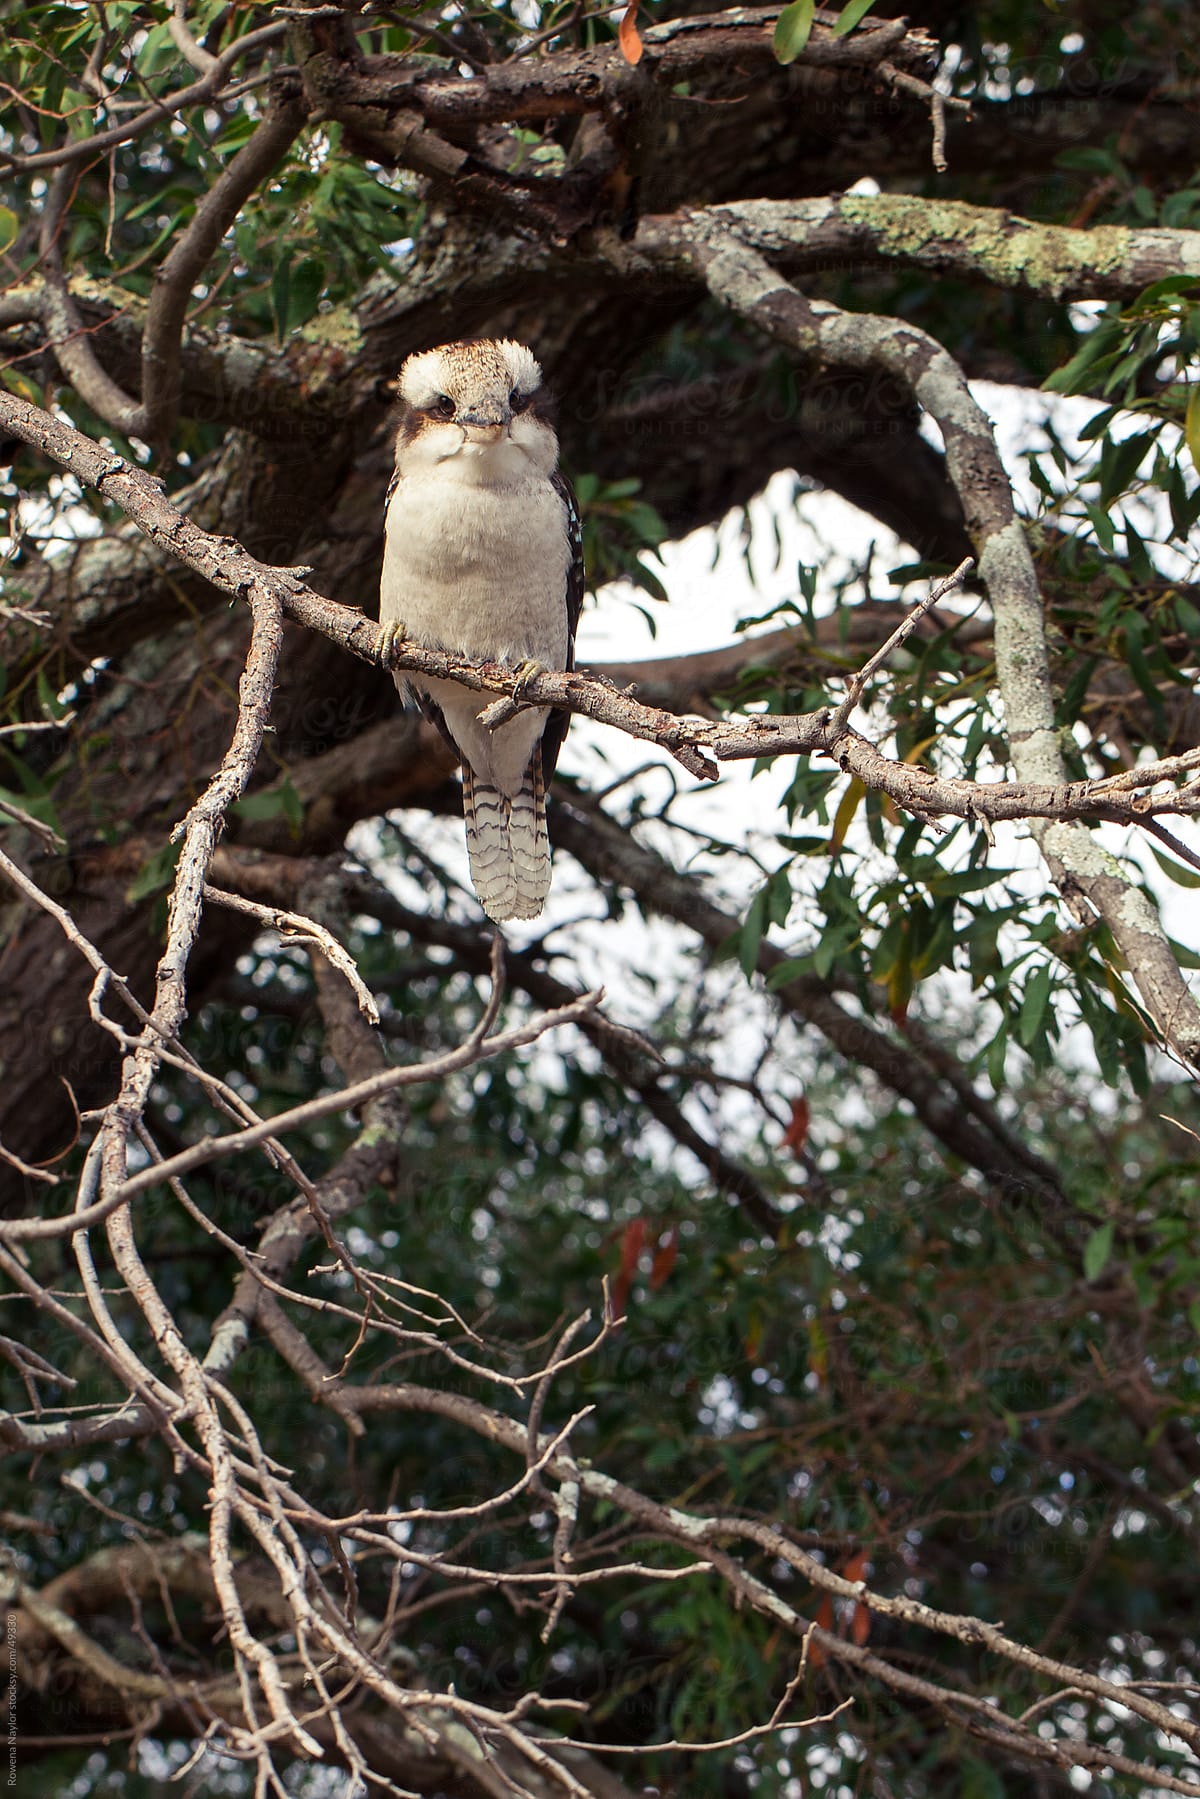 Iconic Australian Kookaburra Bird in Natural Habitat